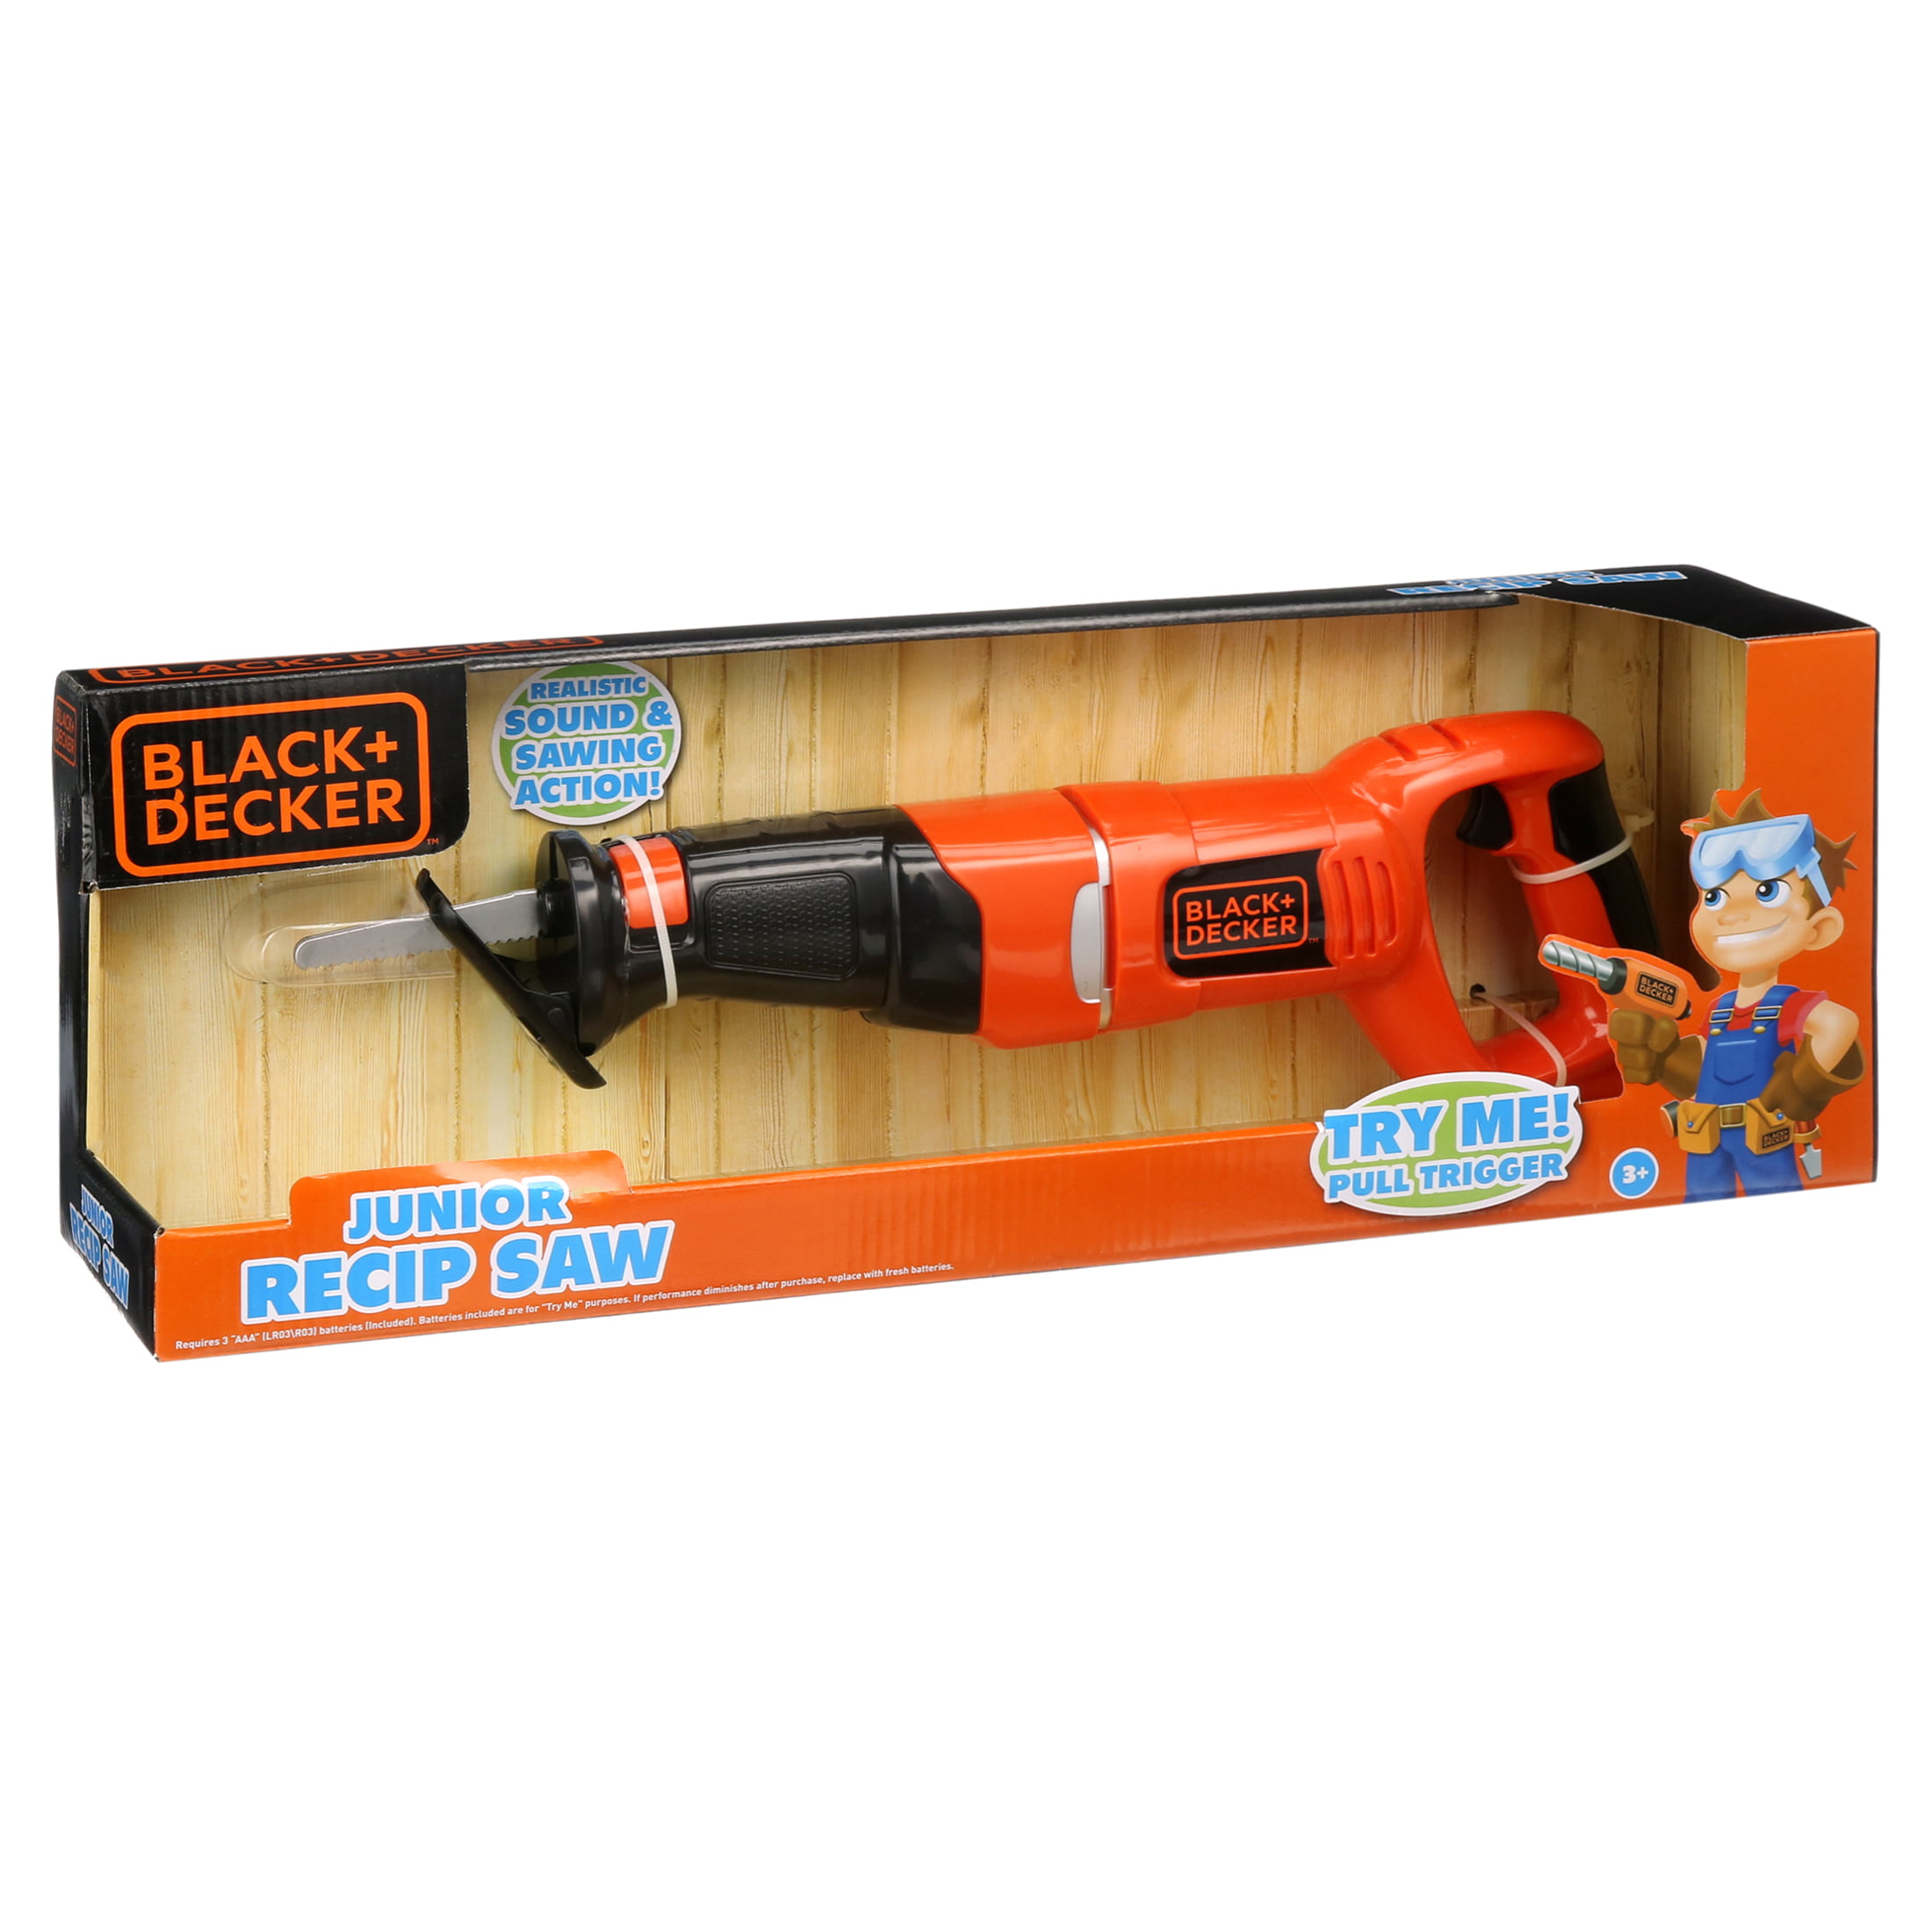 HSB-toys BLACK & DECKER Junior leaf blower tools try me realistic